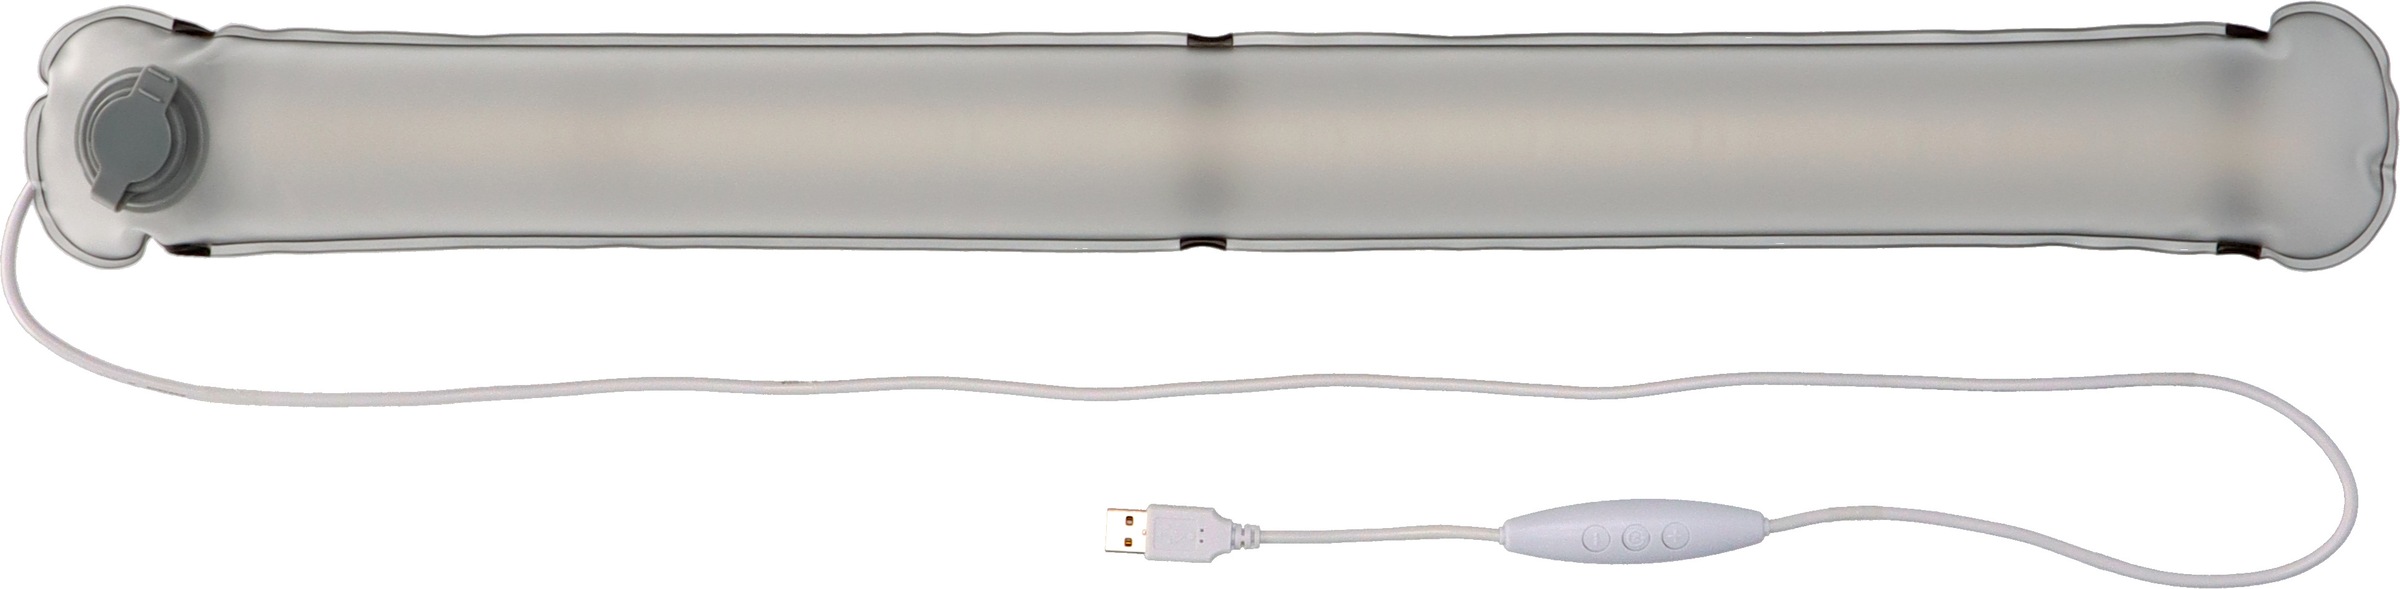 Brennenstuhl LED Gartenleuchte »OLI Air 1«, aufblasbar, stufenlos dimmbar, faltbare LED Röhre mit 1m USB Kabel